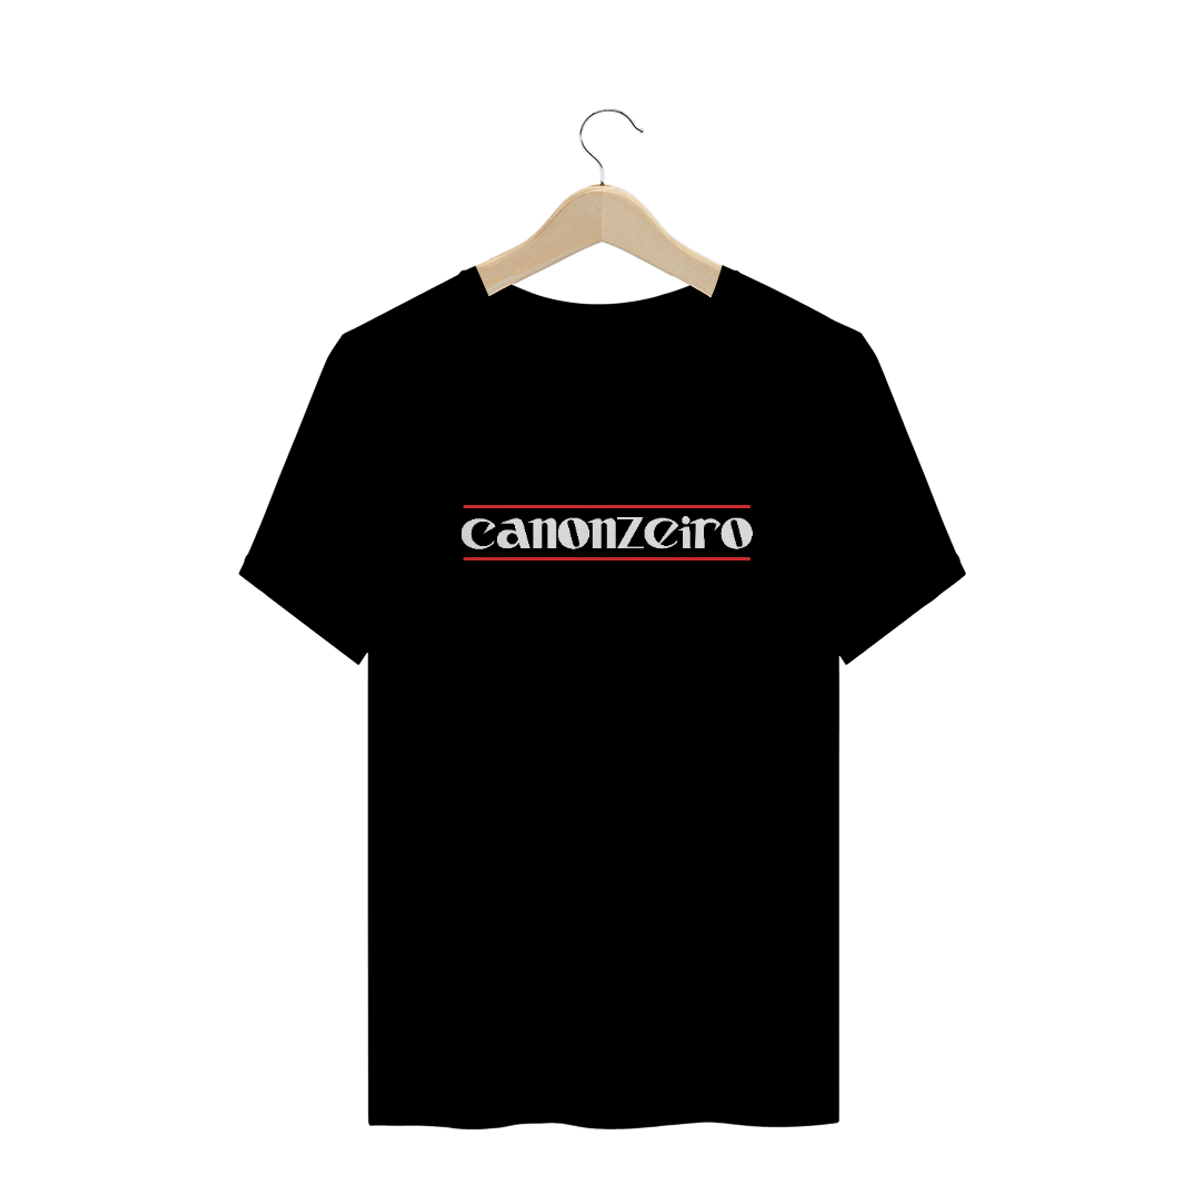 Nome do produto: Camiseta prime - CANONZEIRO